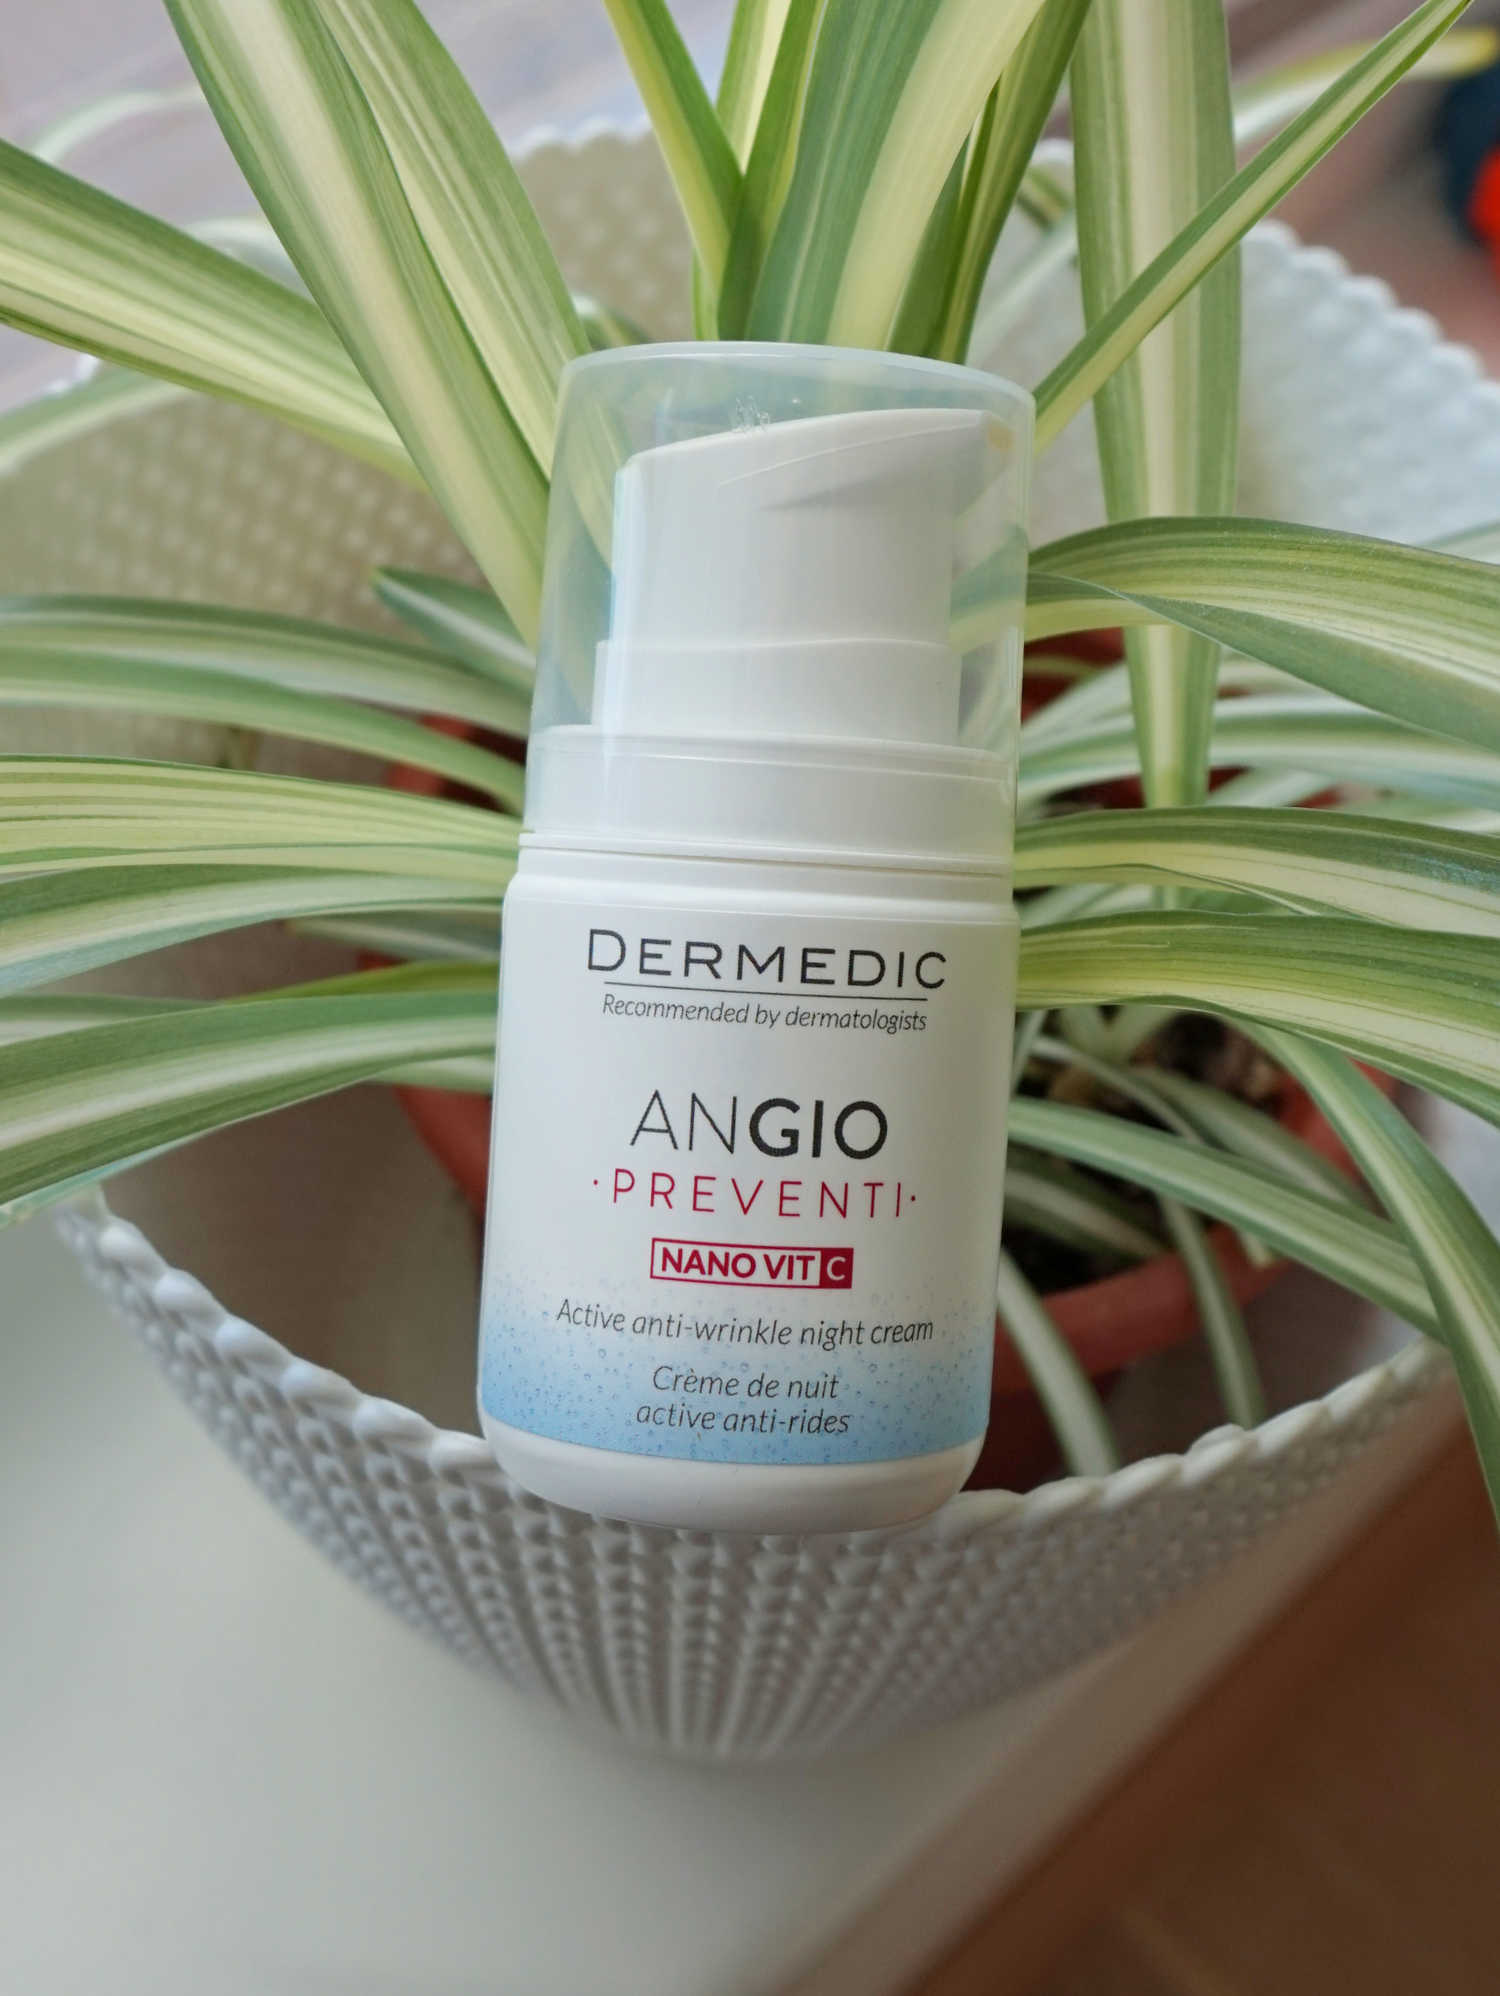  Dermedic Angio Preventi Nano Vit C Active Anti-Wrinkle night cream